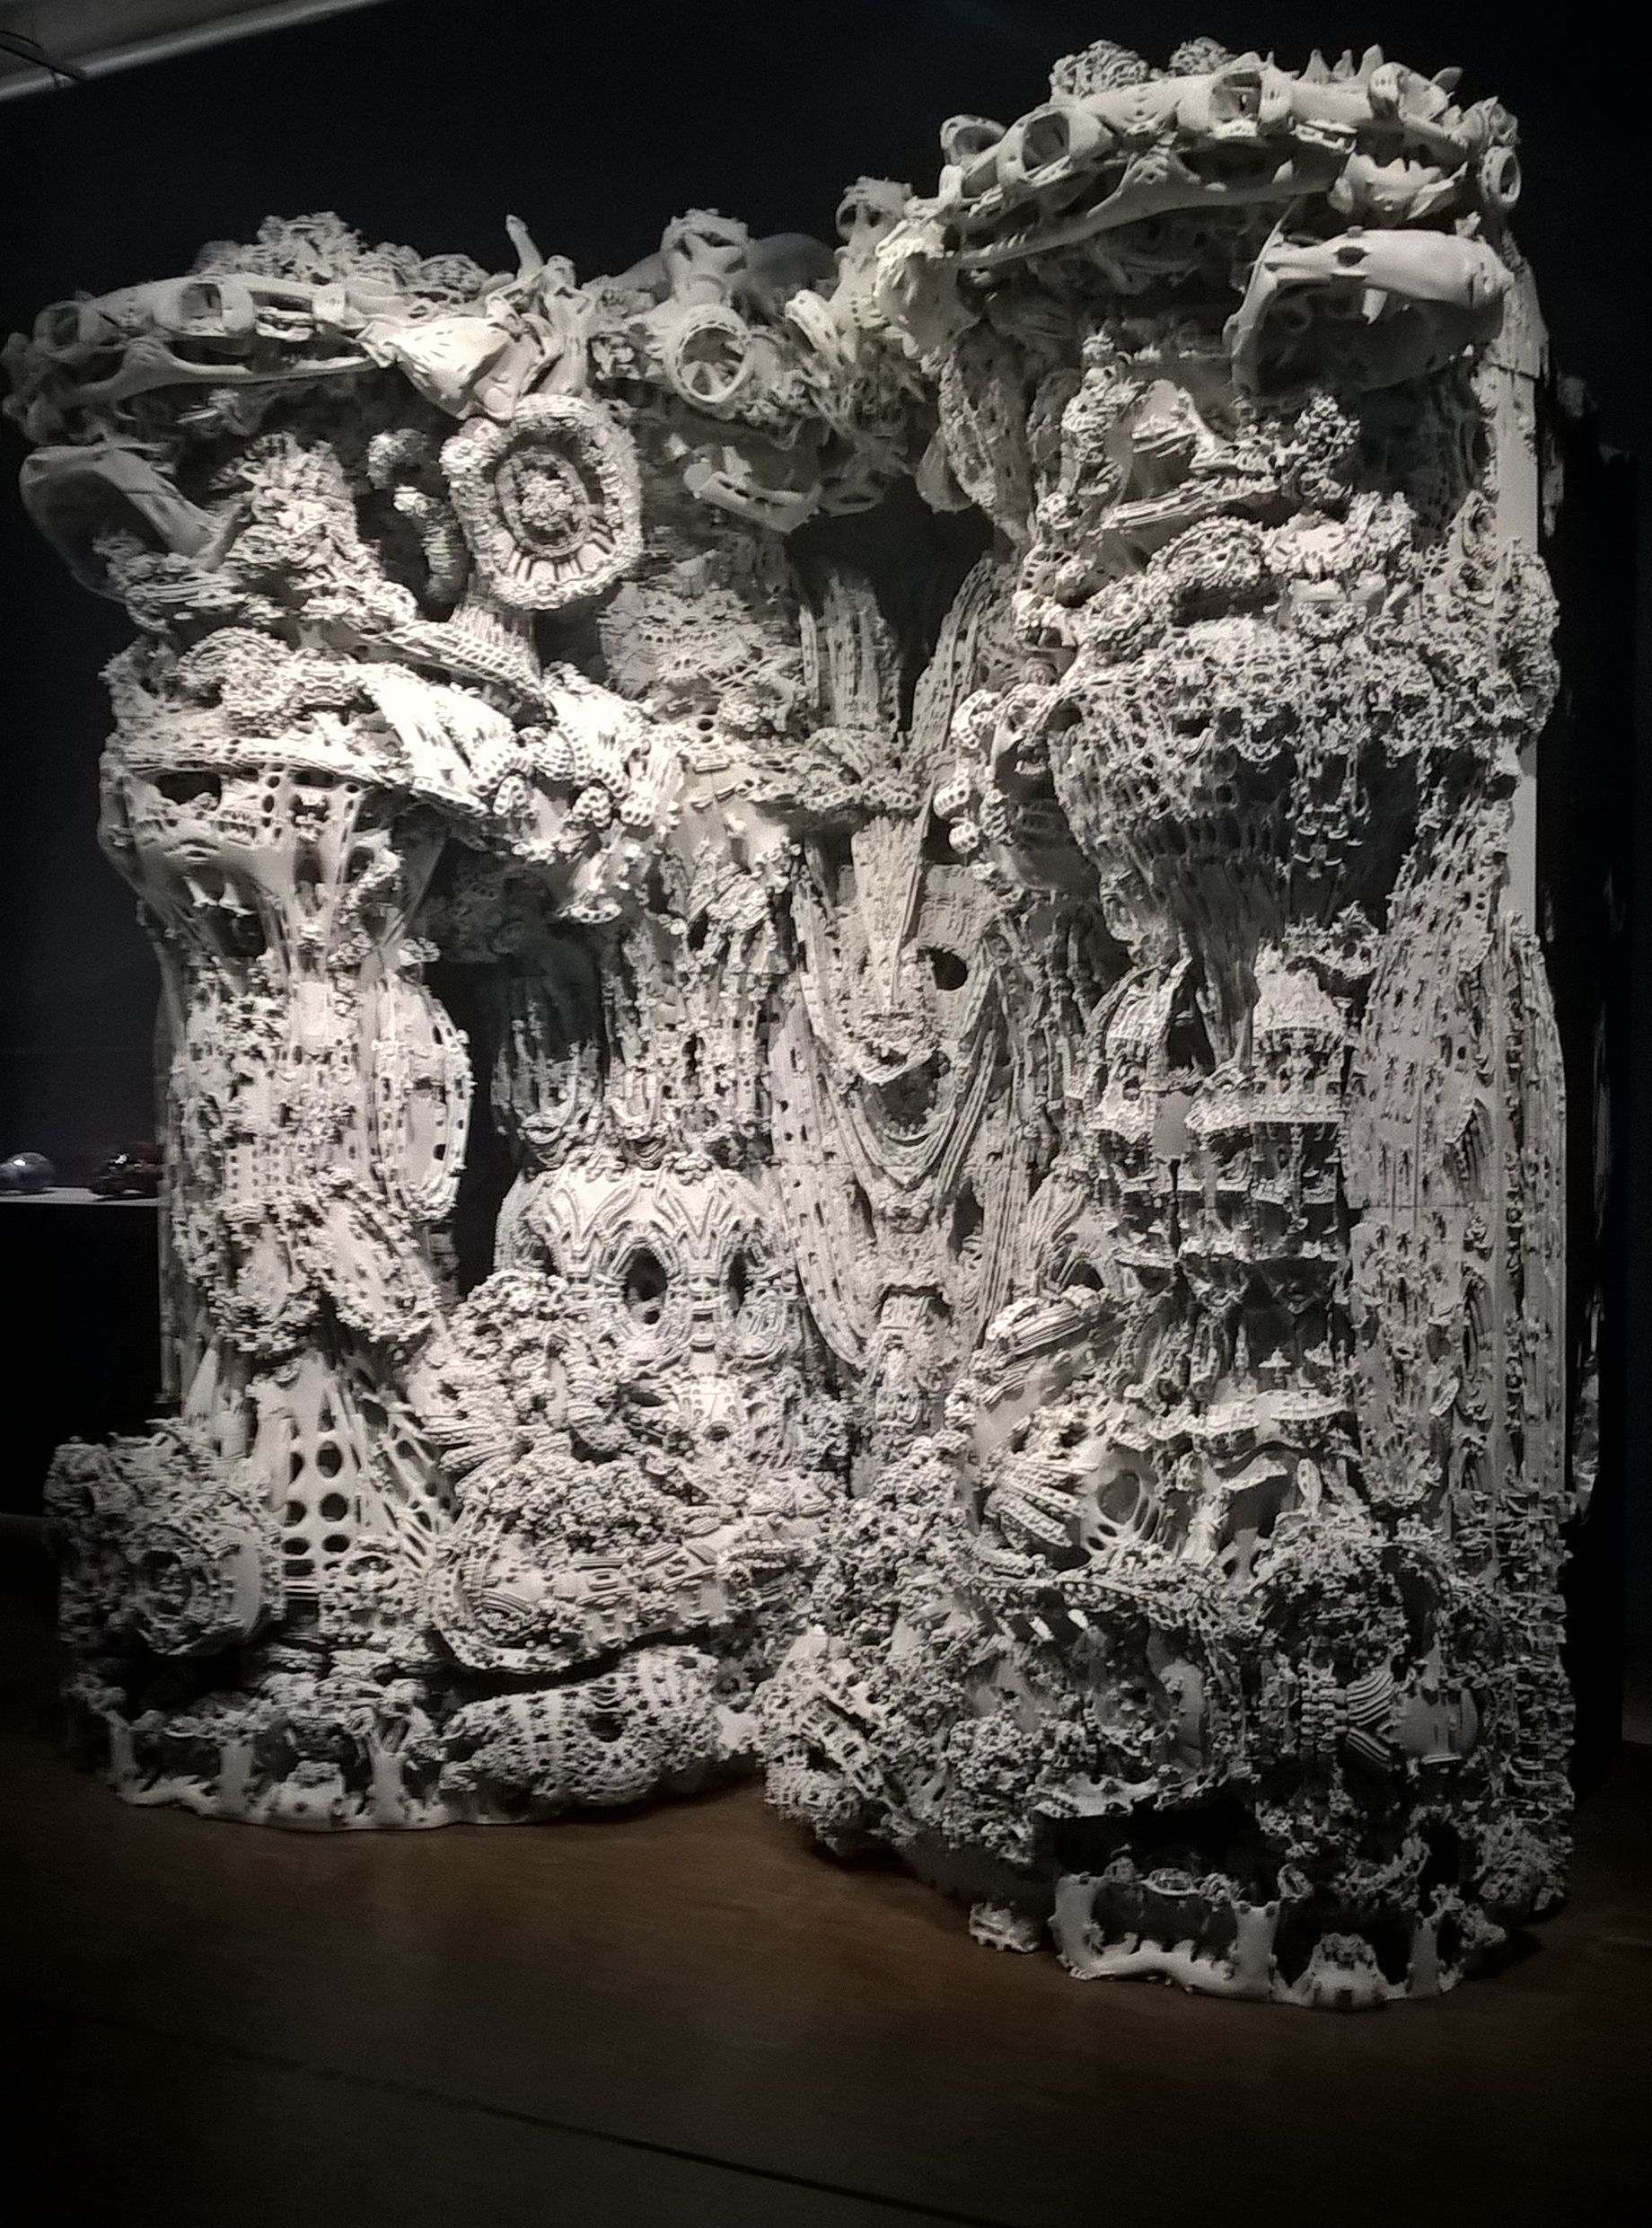 Michael Hansmayer & Benjamin Dillenburger : Grotto II, Digital Grotesque